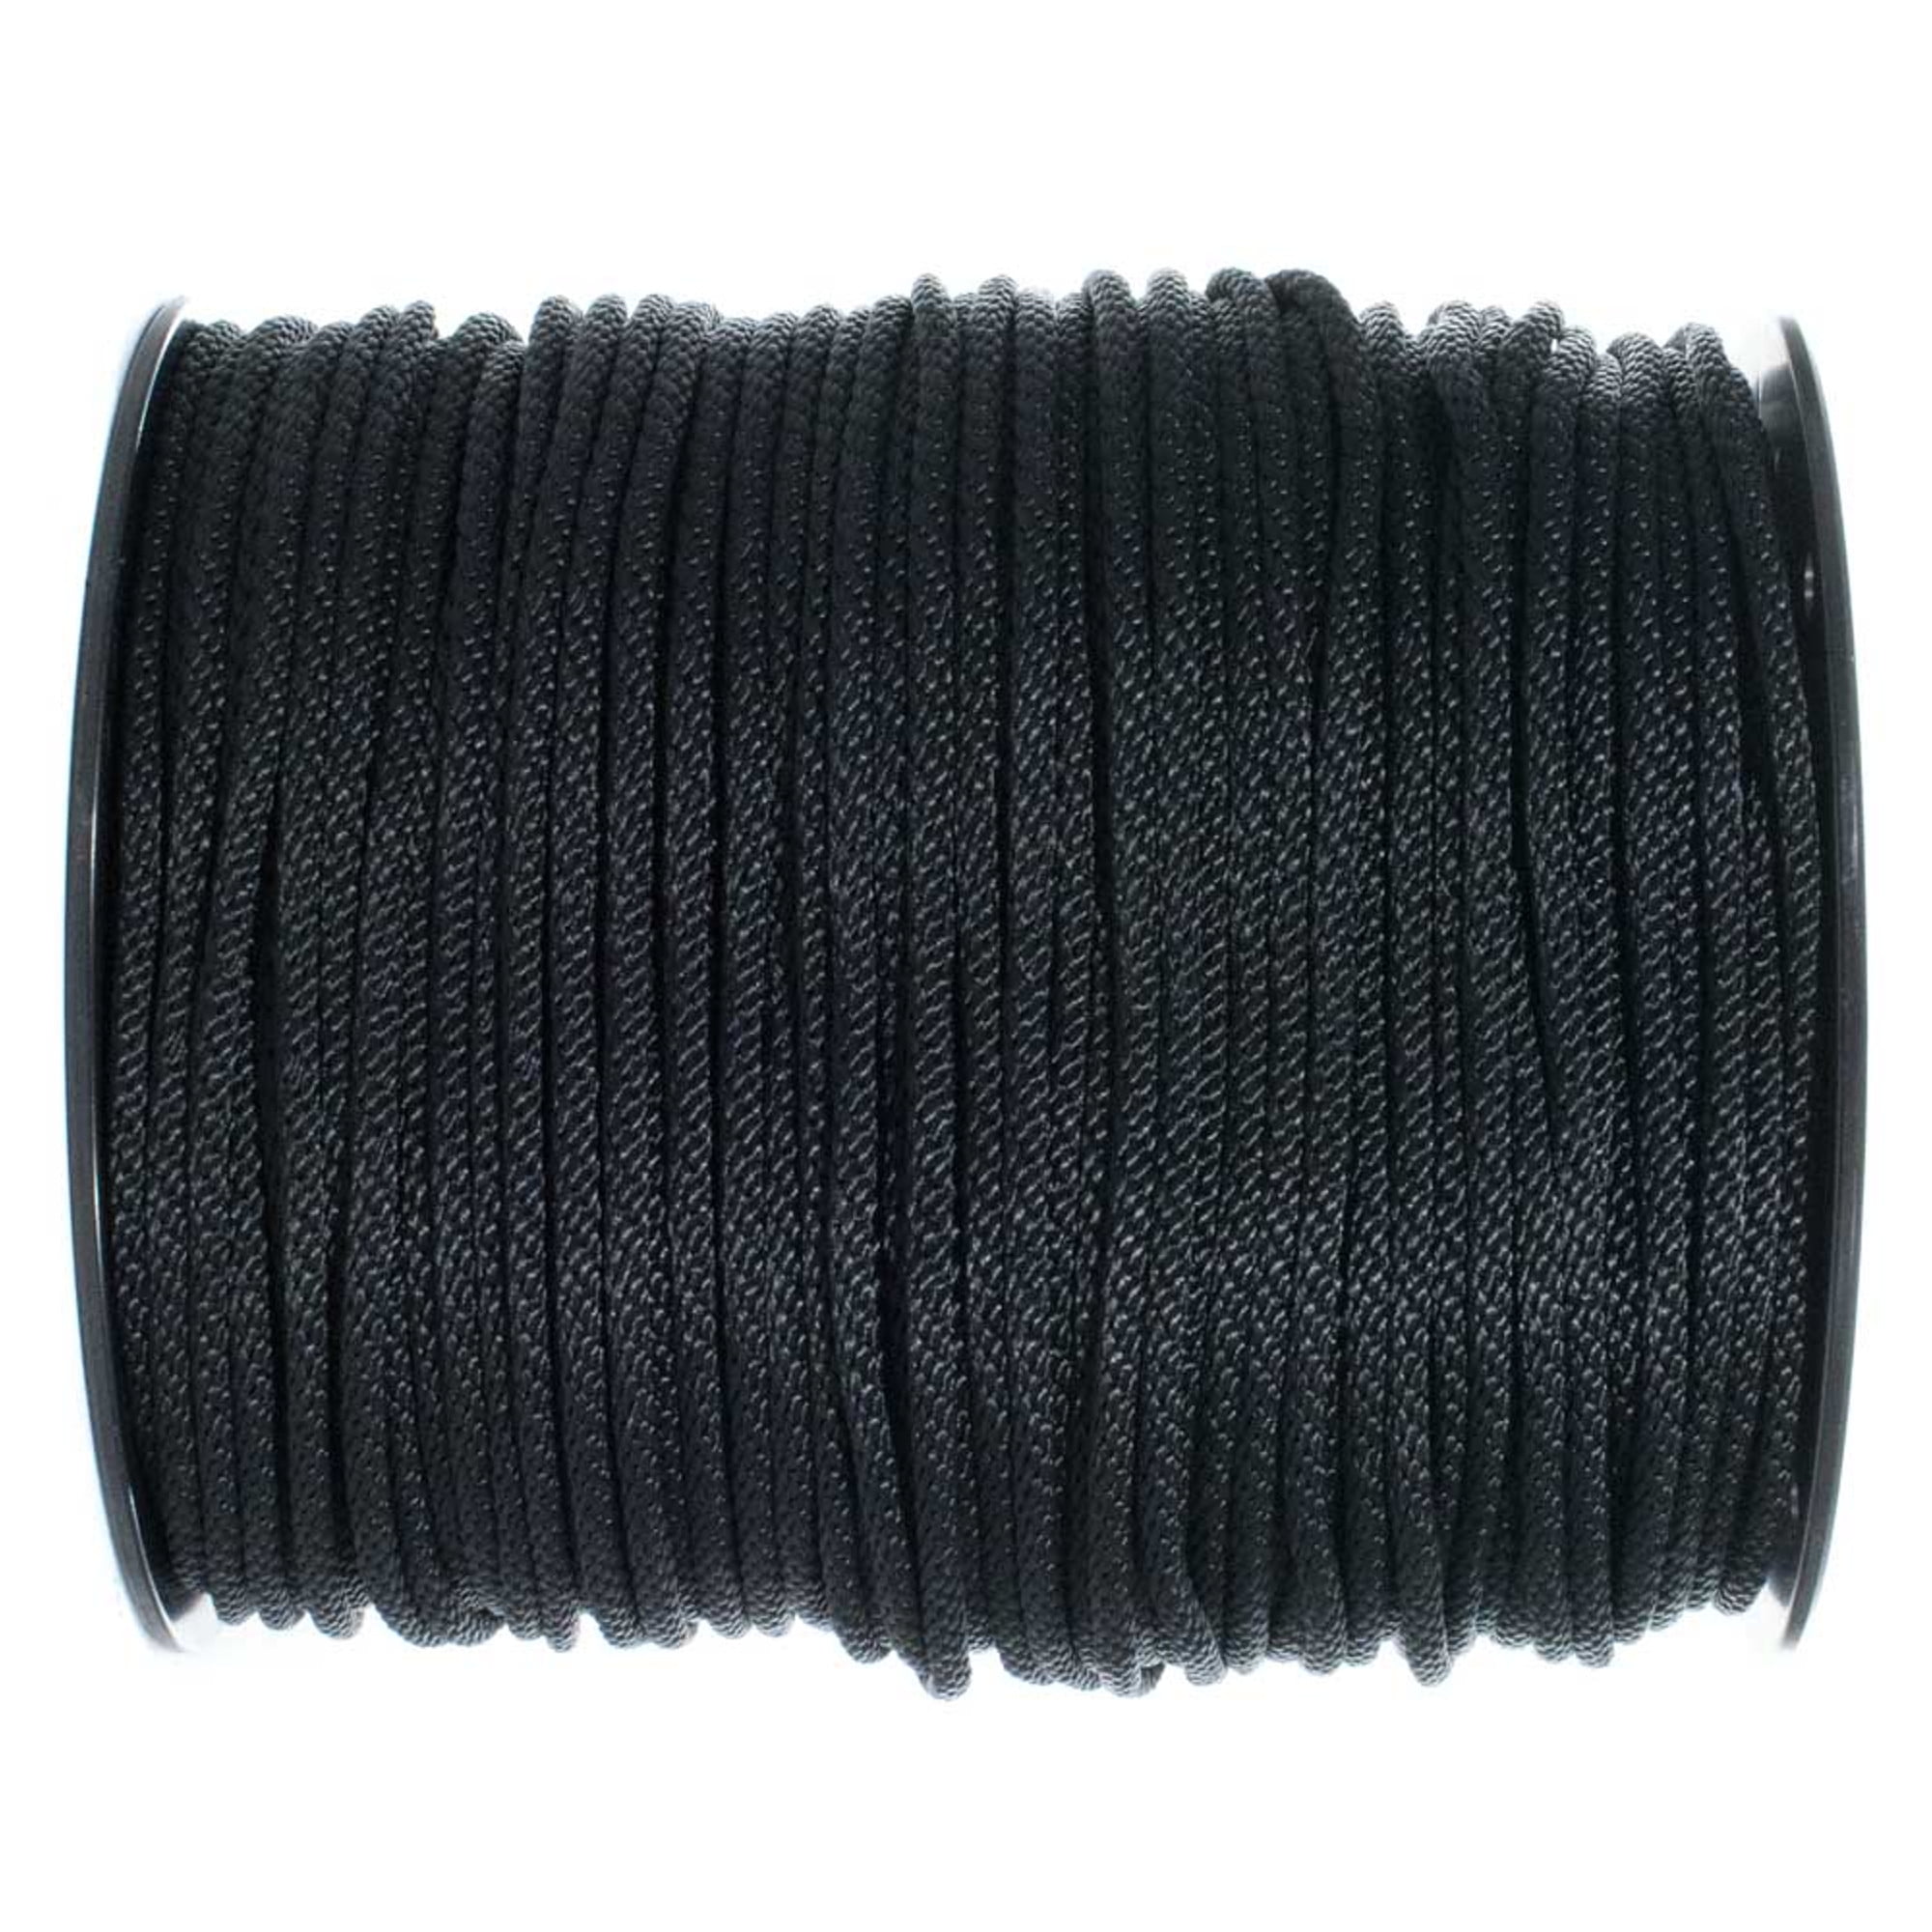 Golberg Black Shock Cord, Bungee Cord - (1/8 Inch x 100 Feet)